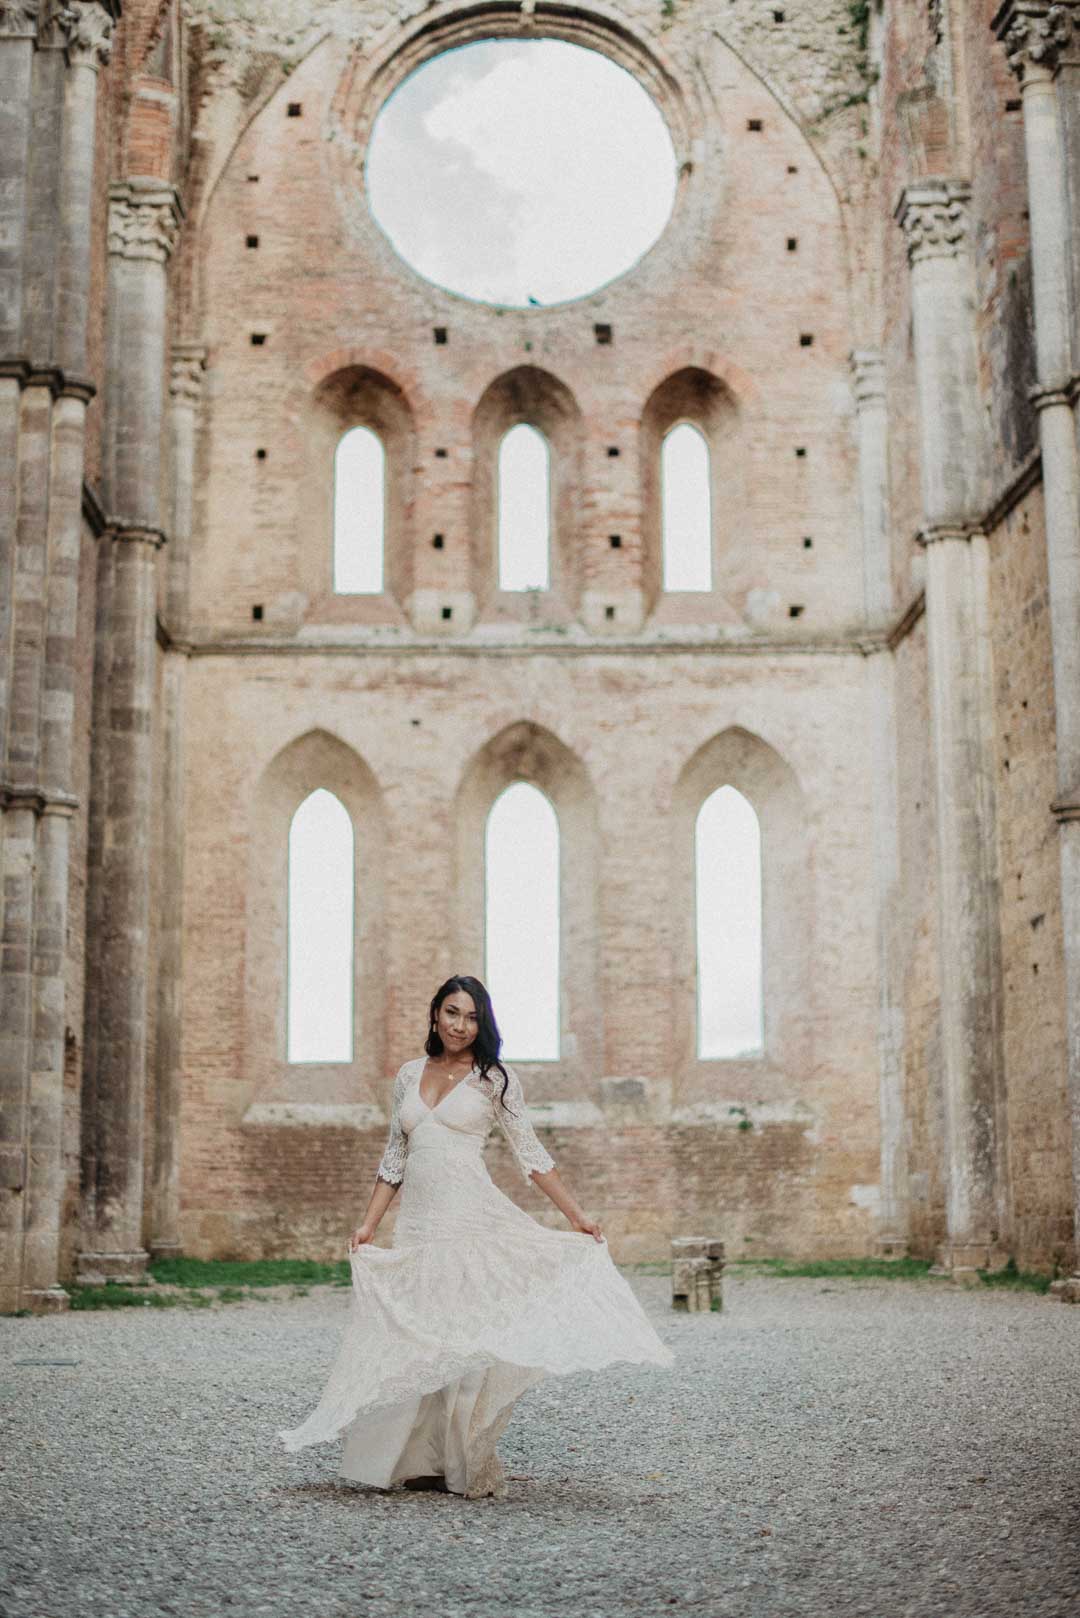 wedding-photographer-destination-fineart-bespoke-reportage-tuscany-sangalgano-abbey-borgosanpietro-vivianeizzo-spazio46-118